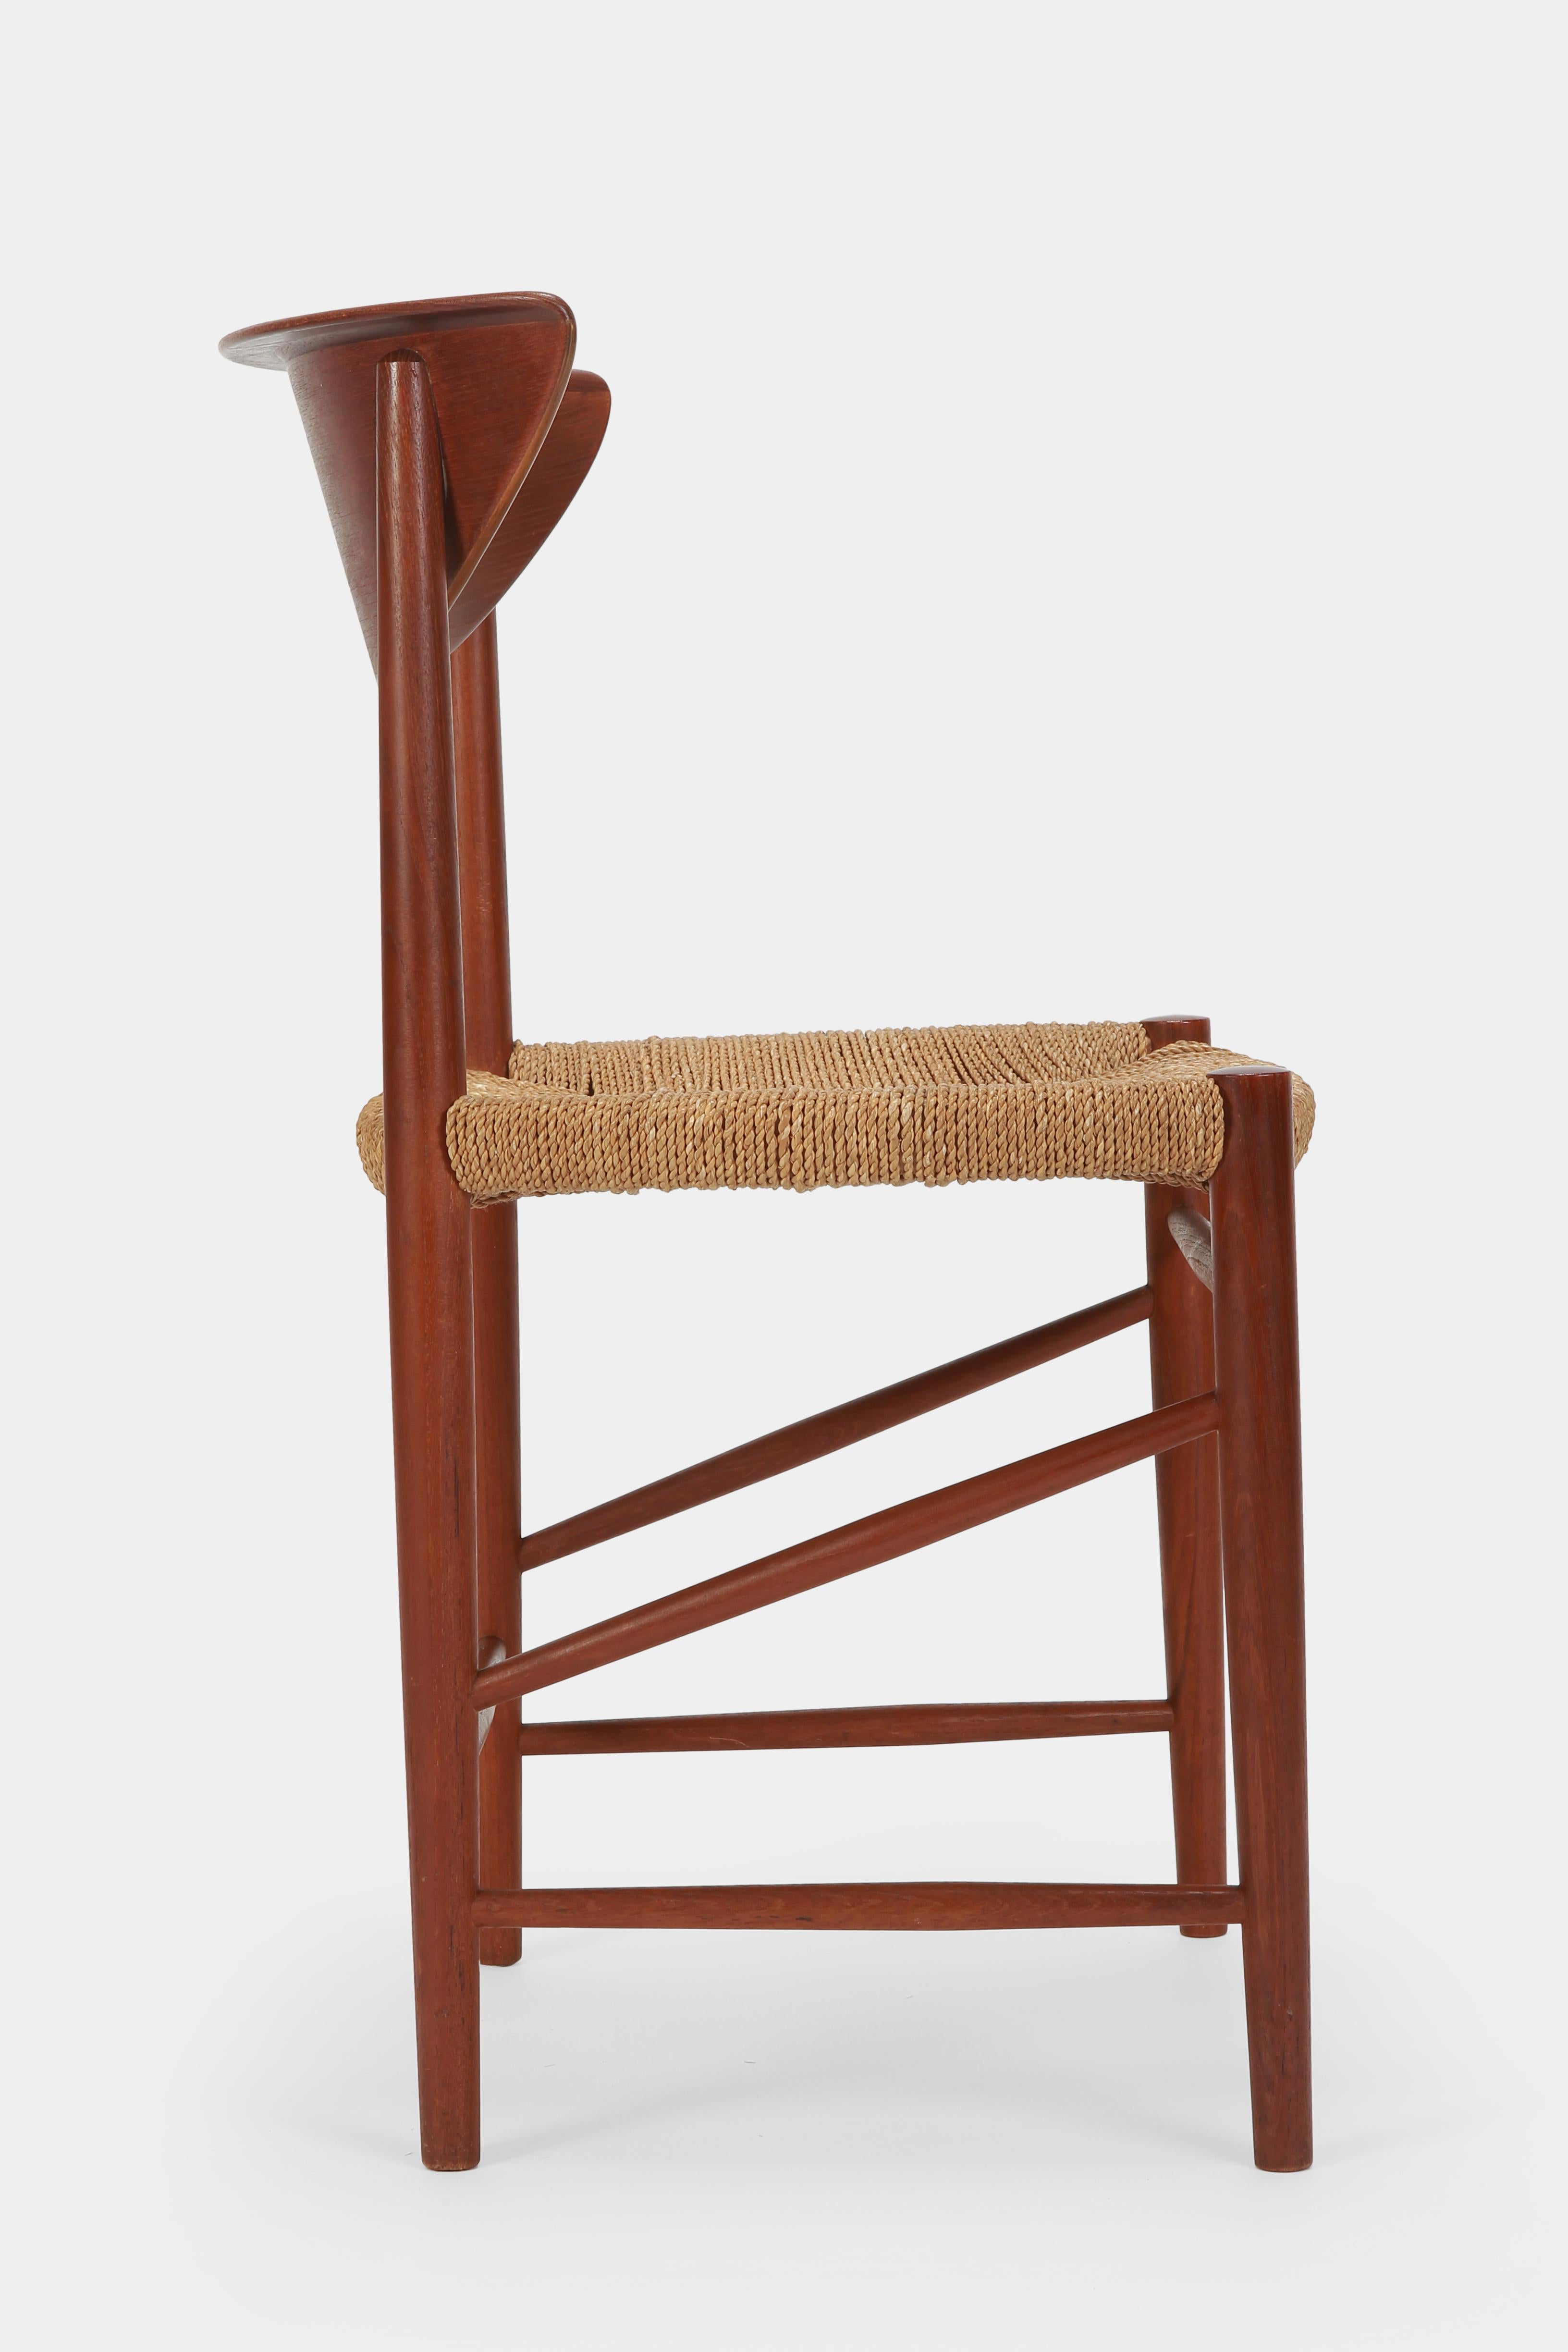 Mid-20th Century Hvidt & Mølgaard Single Chair Teak, 1950s For Sale